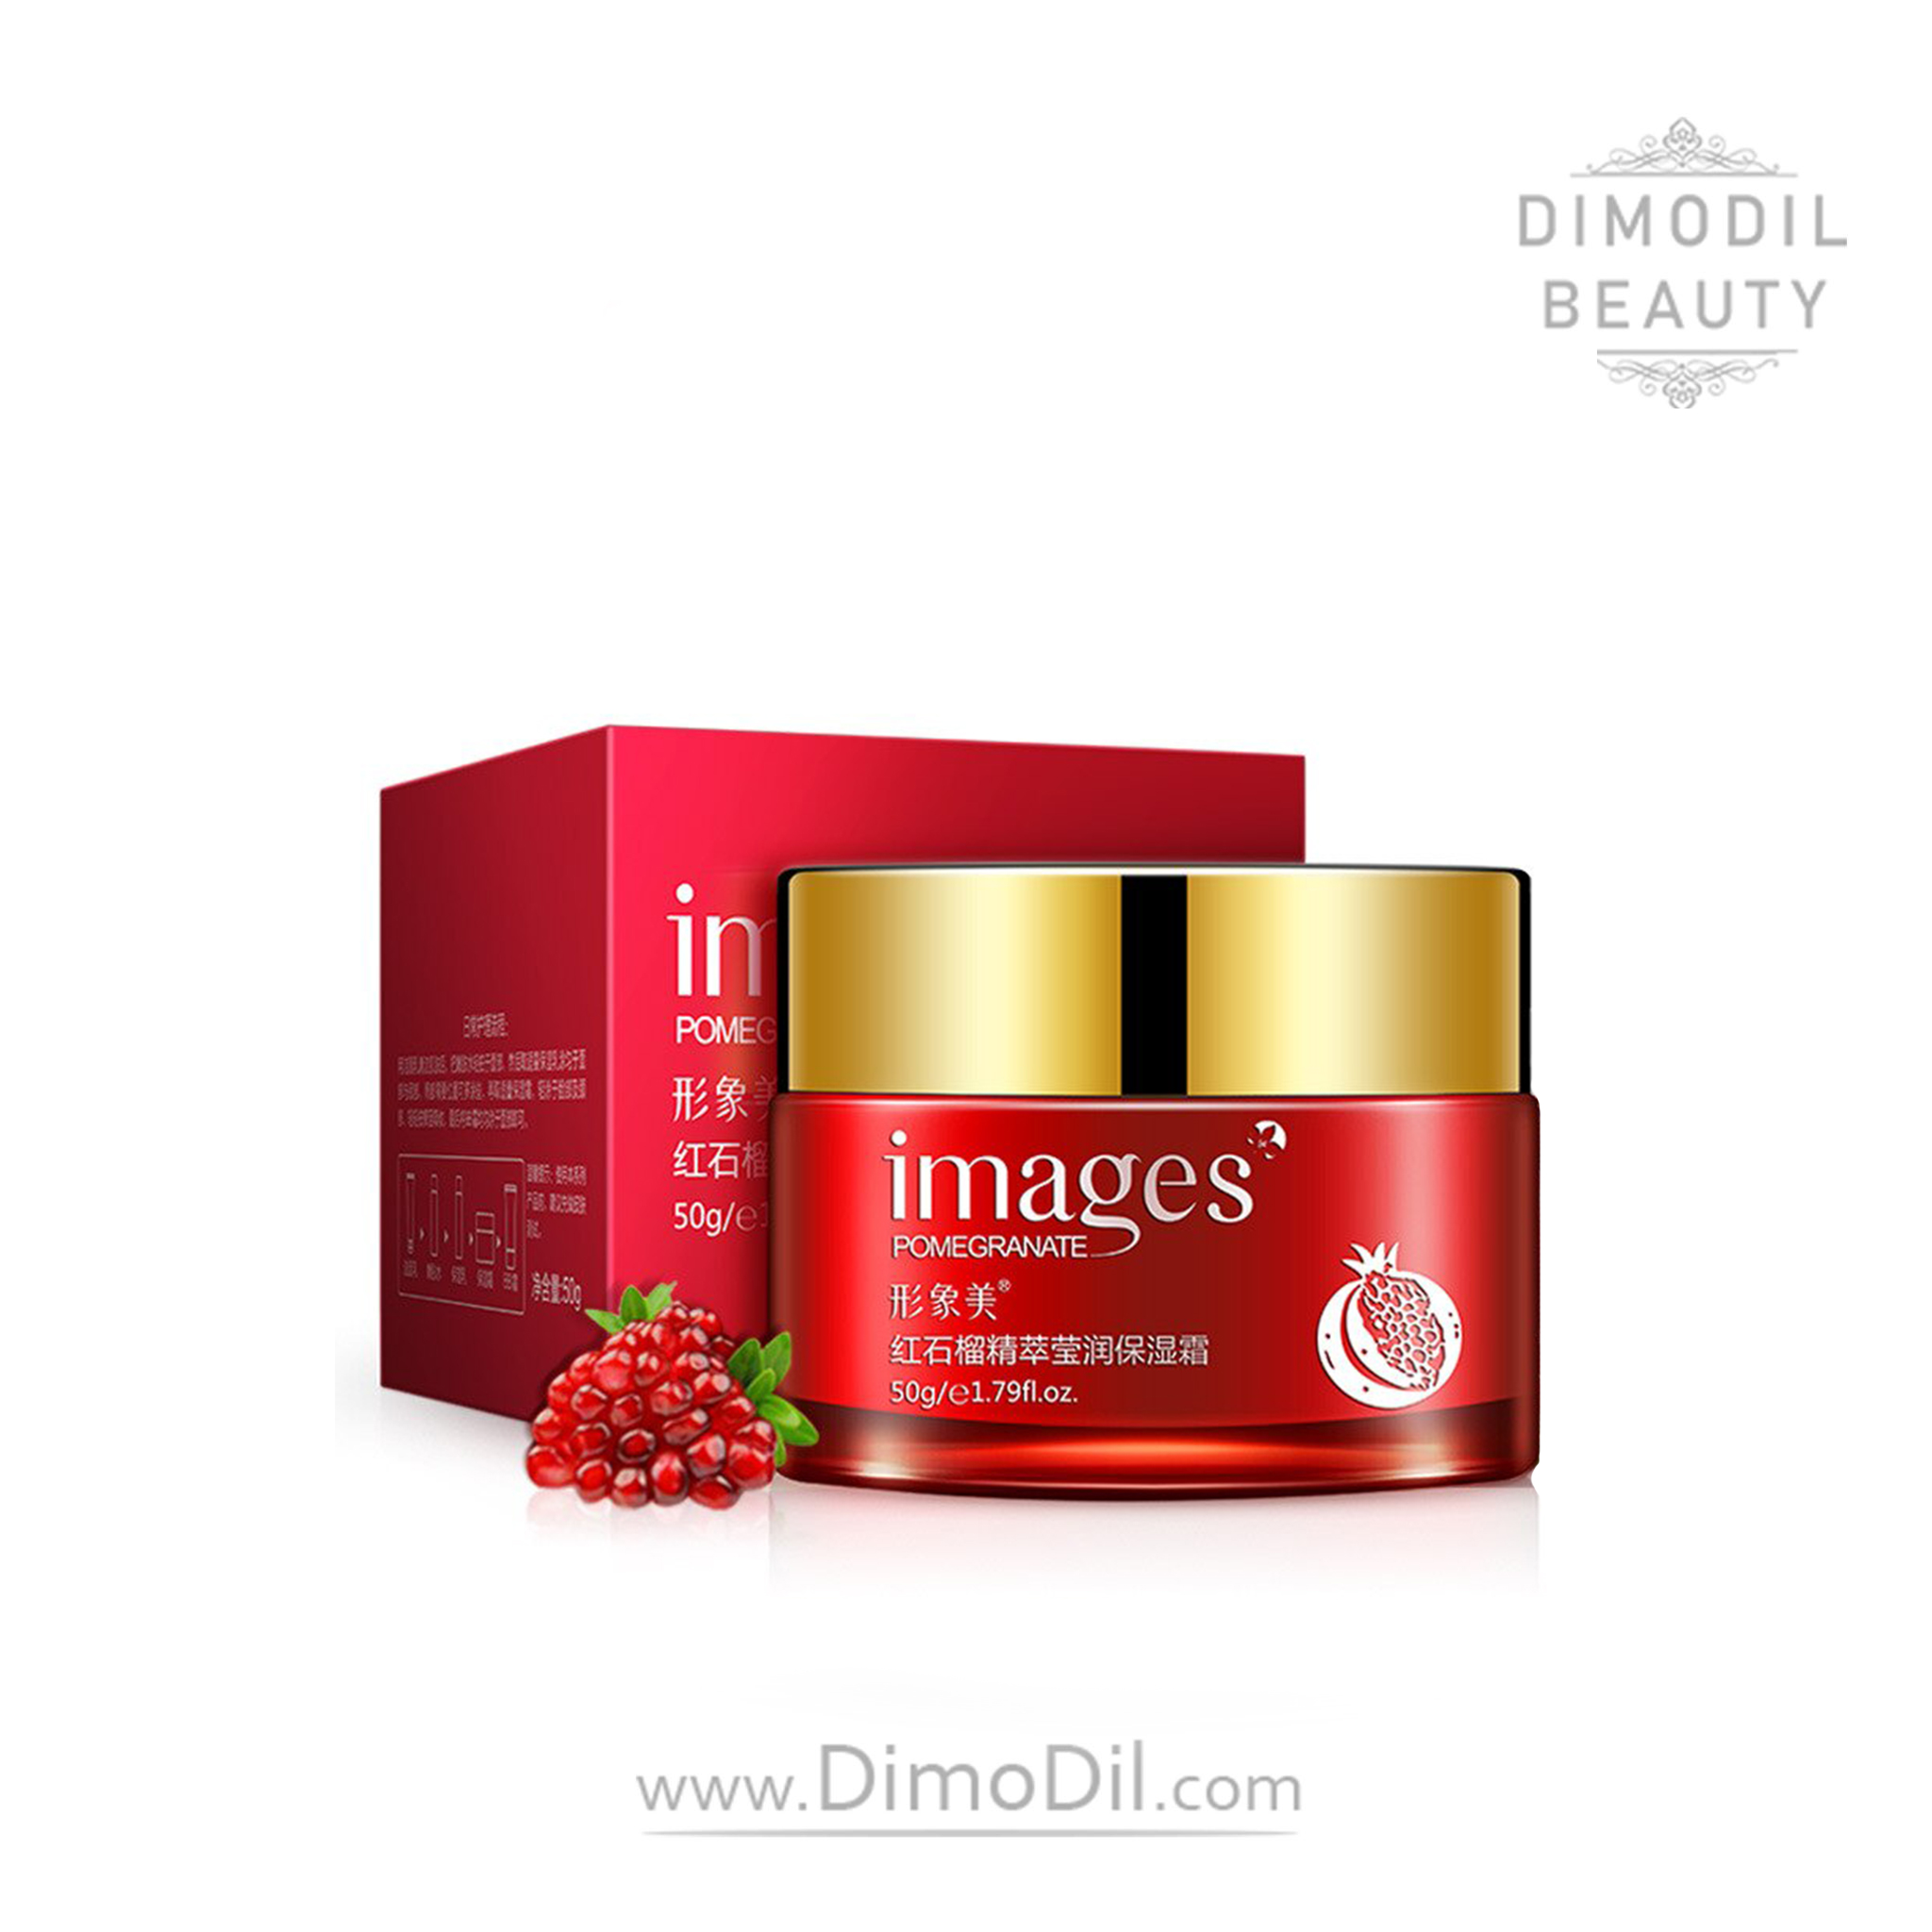 images-pomegranate-moisturizer